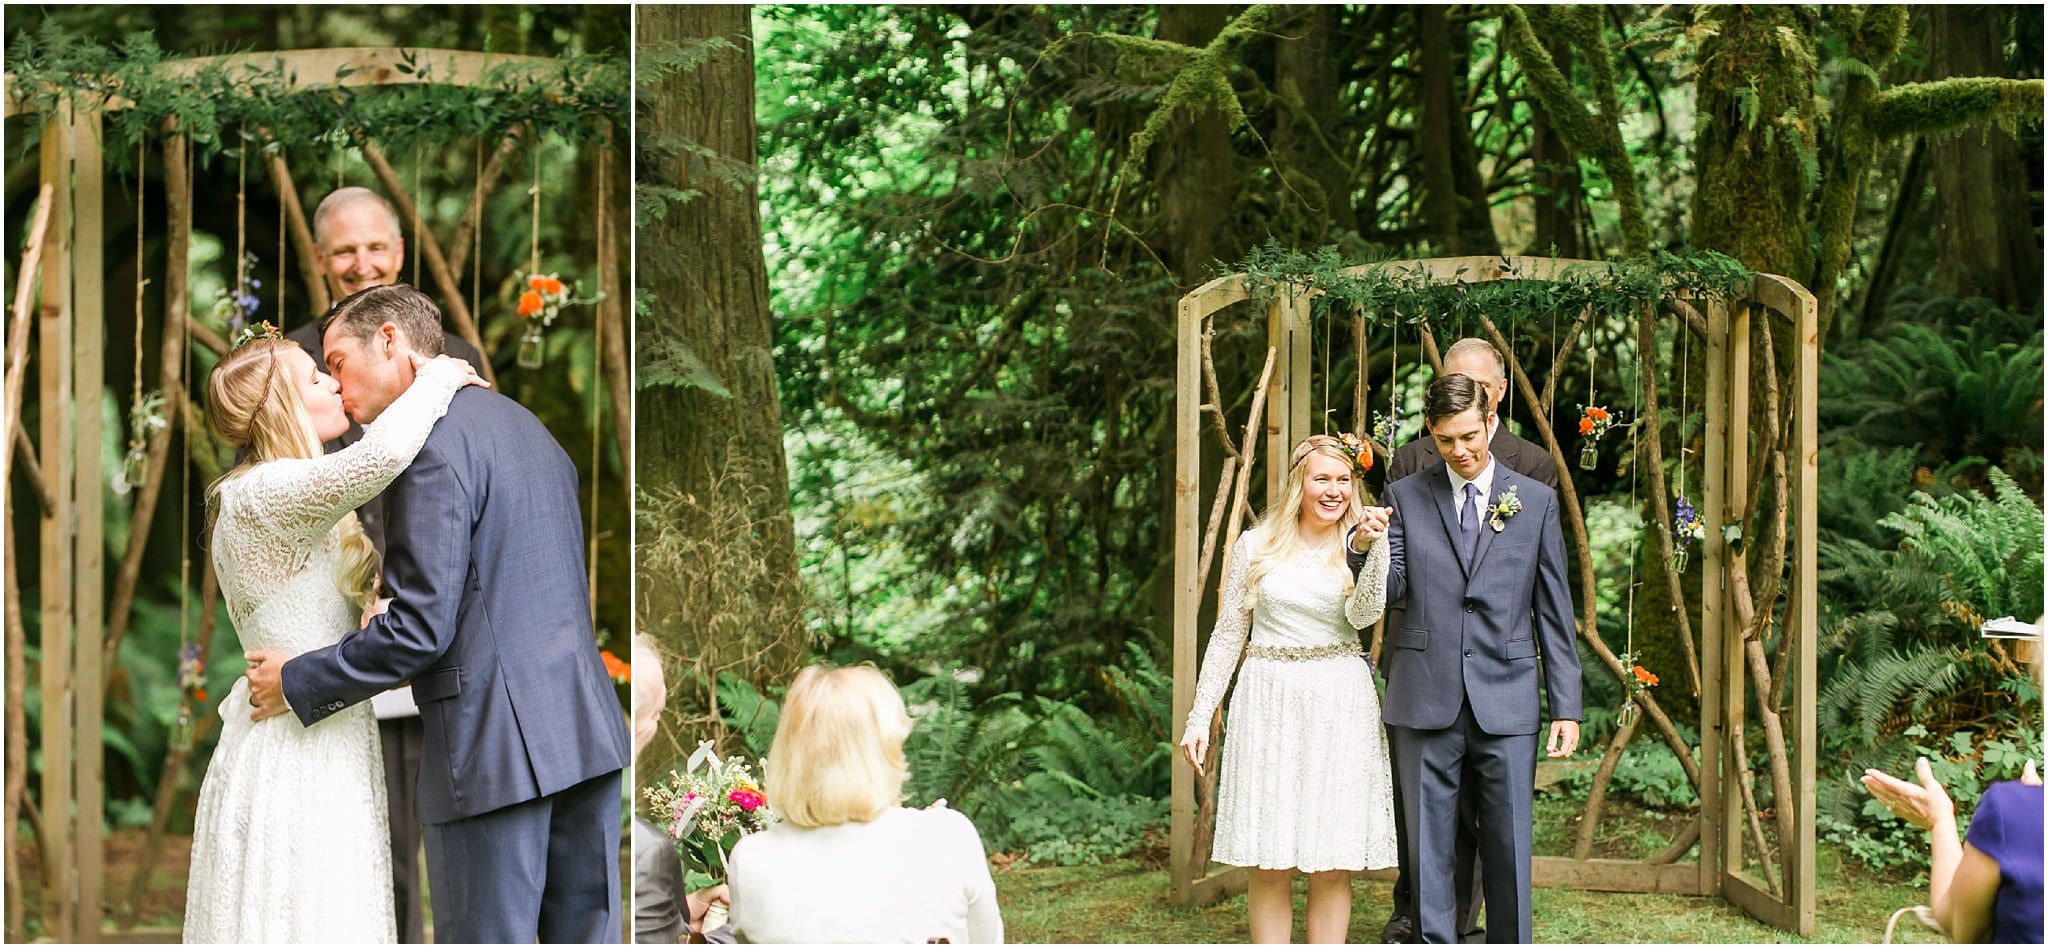 treehouse point elopement, elopement photographer, tree house point, tree house elopement, eclectic wedding, forest wedding